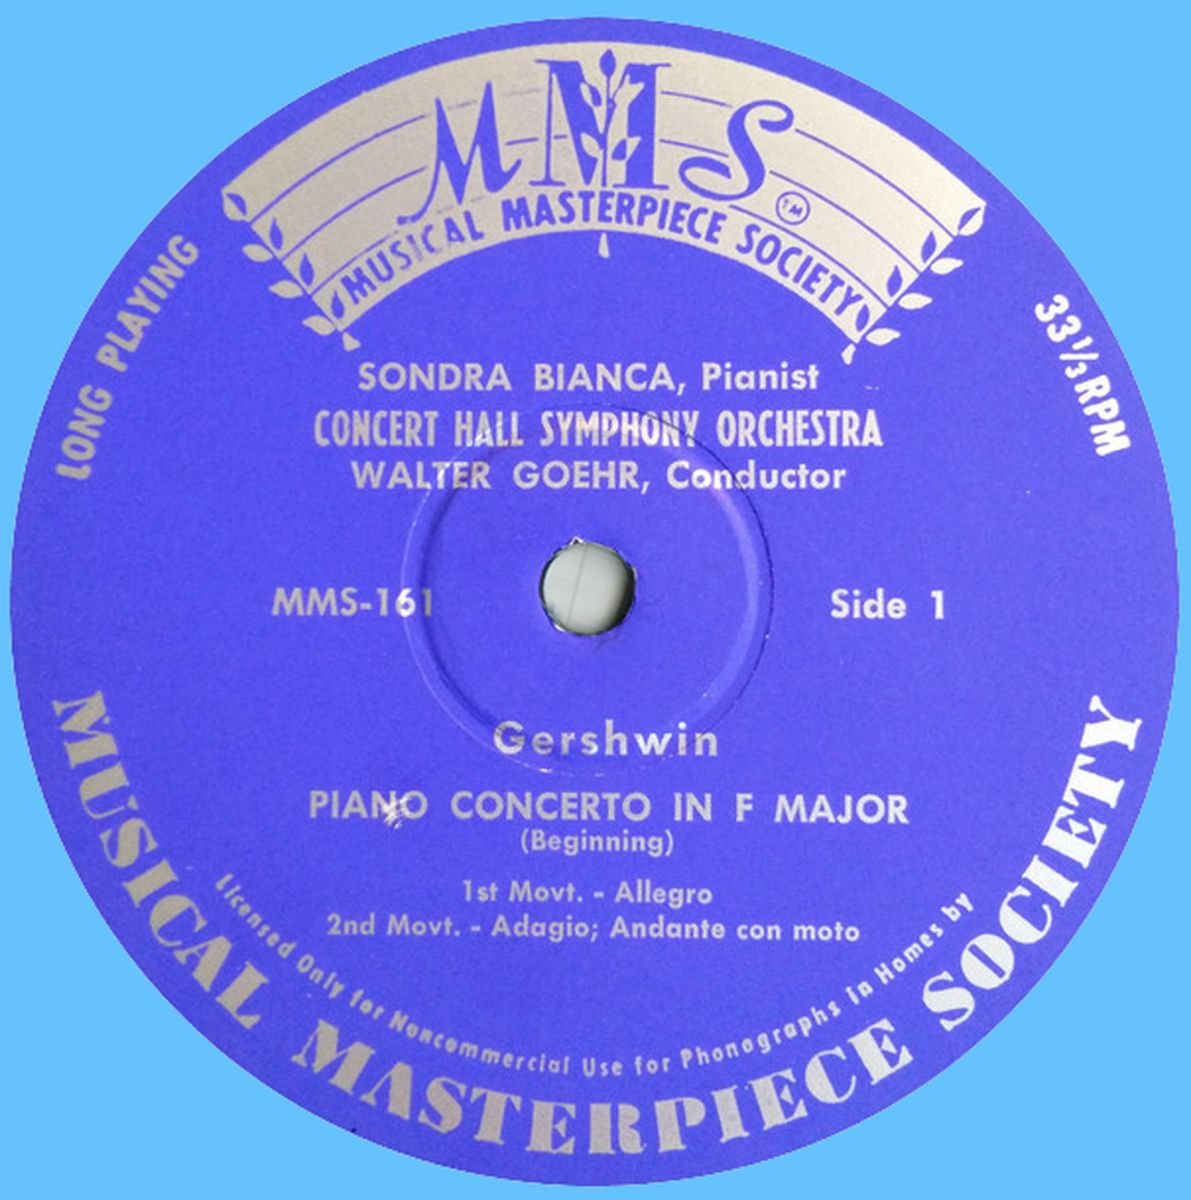 Étiquette recto du disque «Musical Masterpiece Society» MMS-161